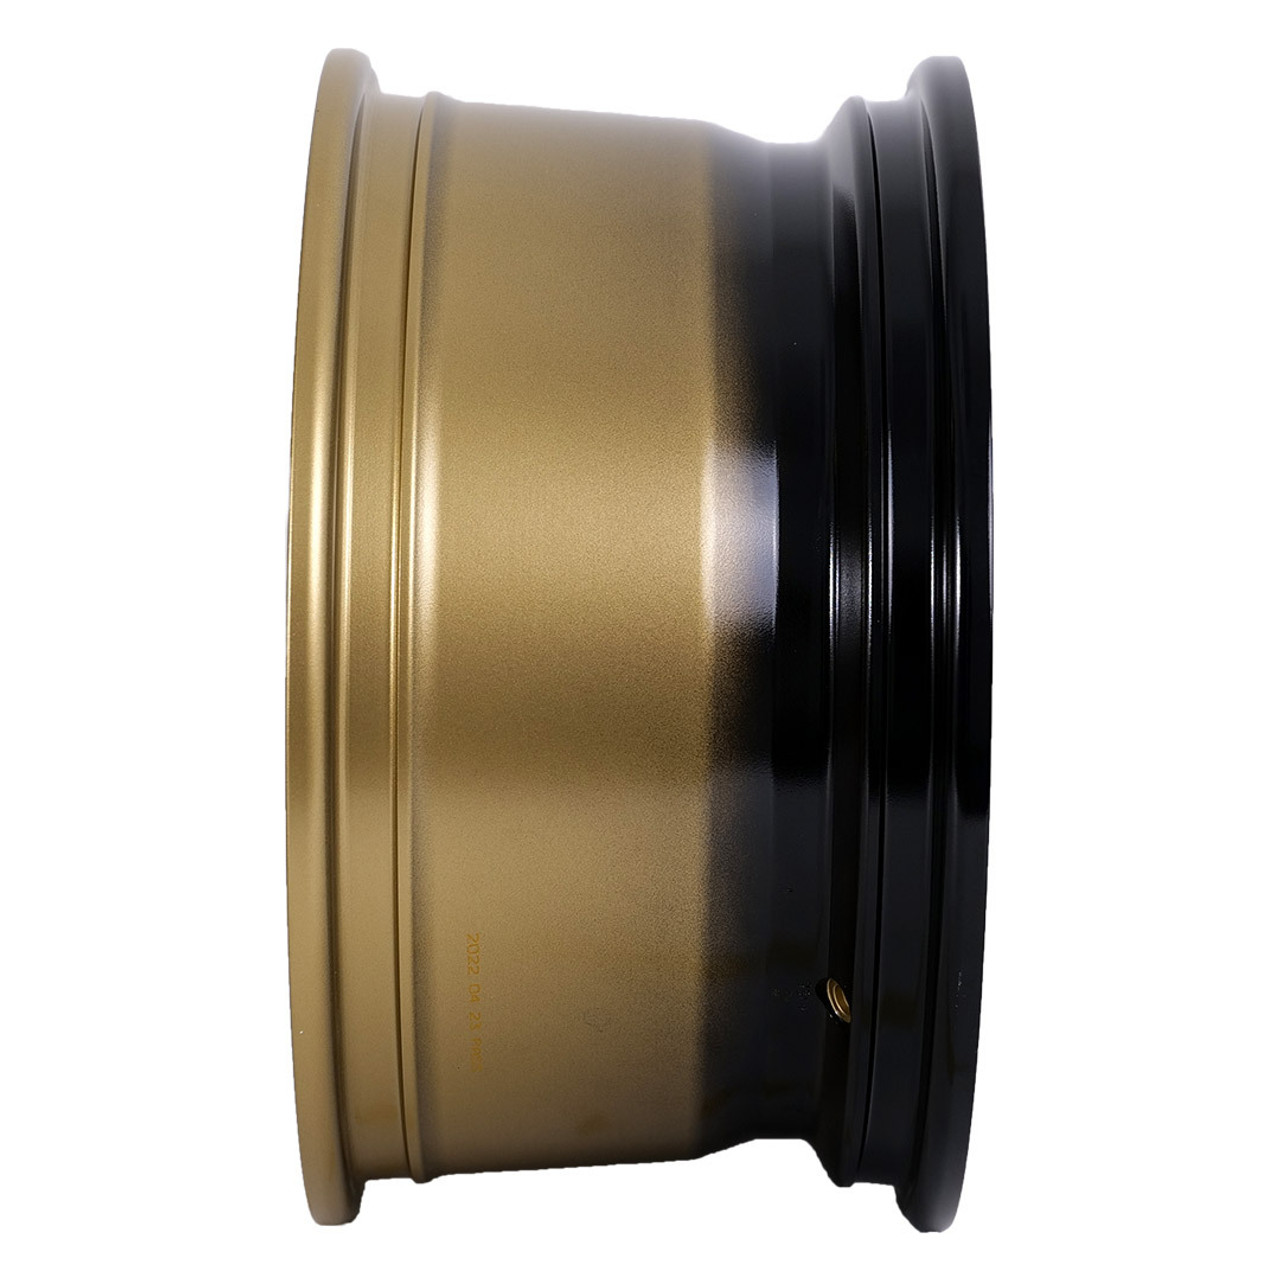 17" Tremor 103 Impact Gloss Gold Gloss Black Lip Wheel 17x8.5 8x6.5 0mm Rim